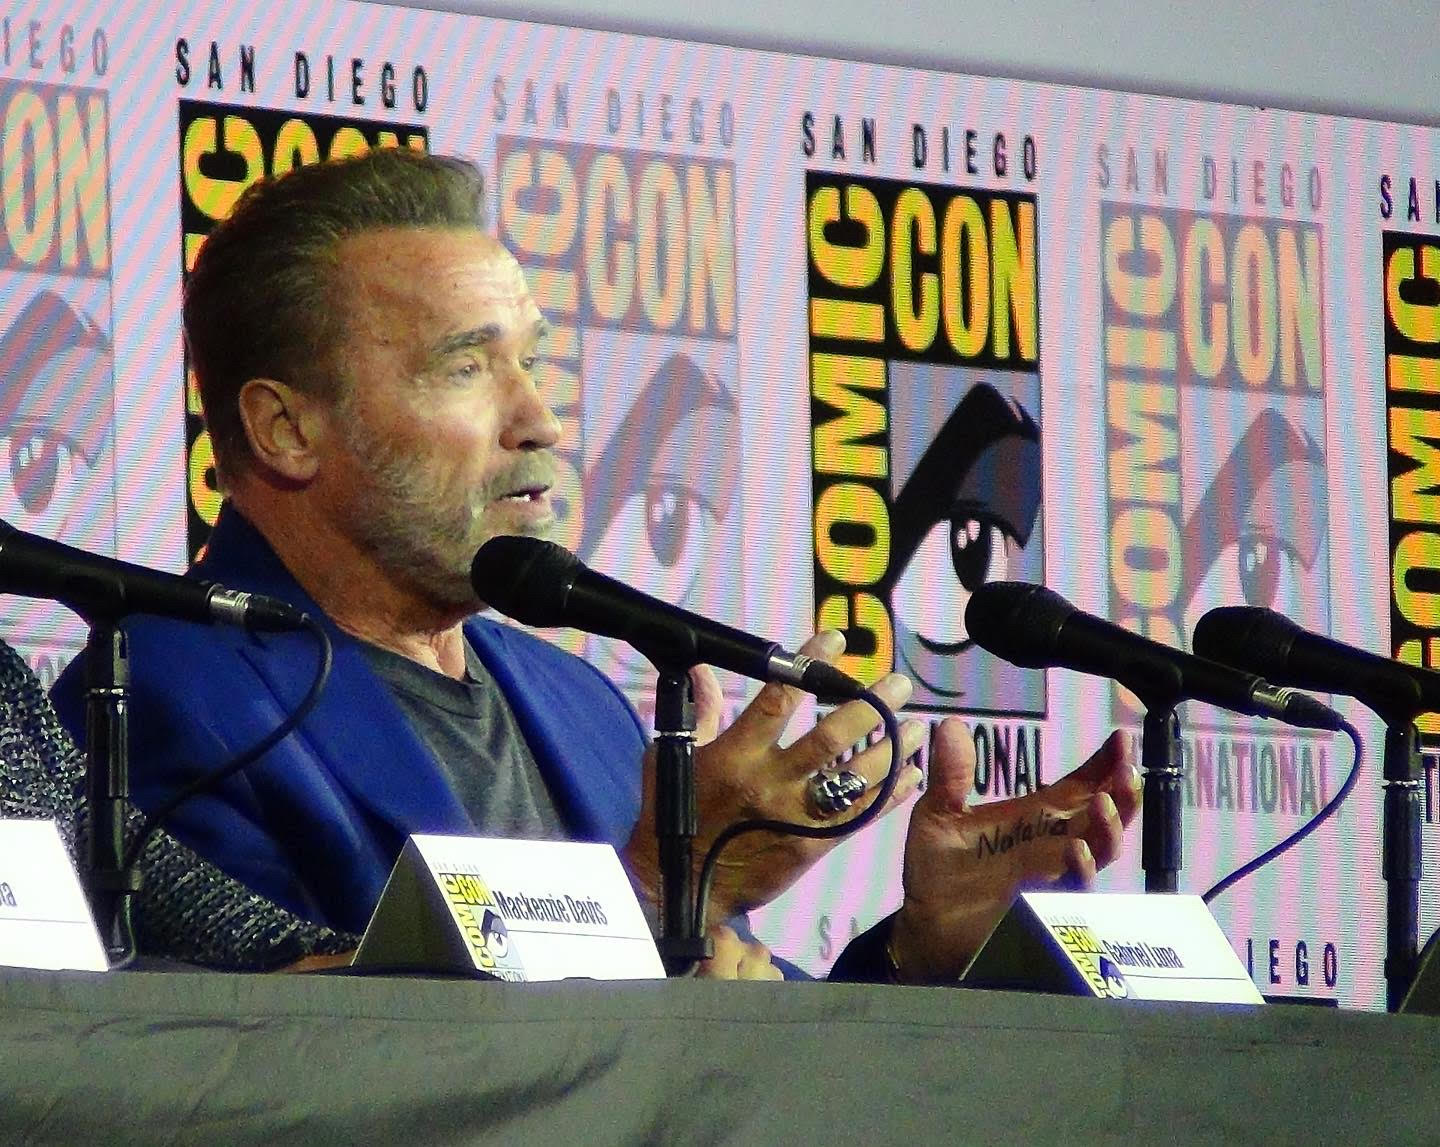 O republicano Schwarzenegger na San Diego Comic-Con de 2019, quando aproveitou o evento para fazer críticas ao governo Trump (crédito: Renan Martins Frade)